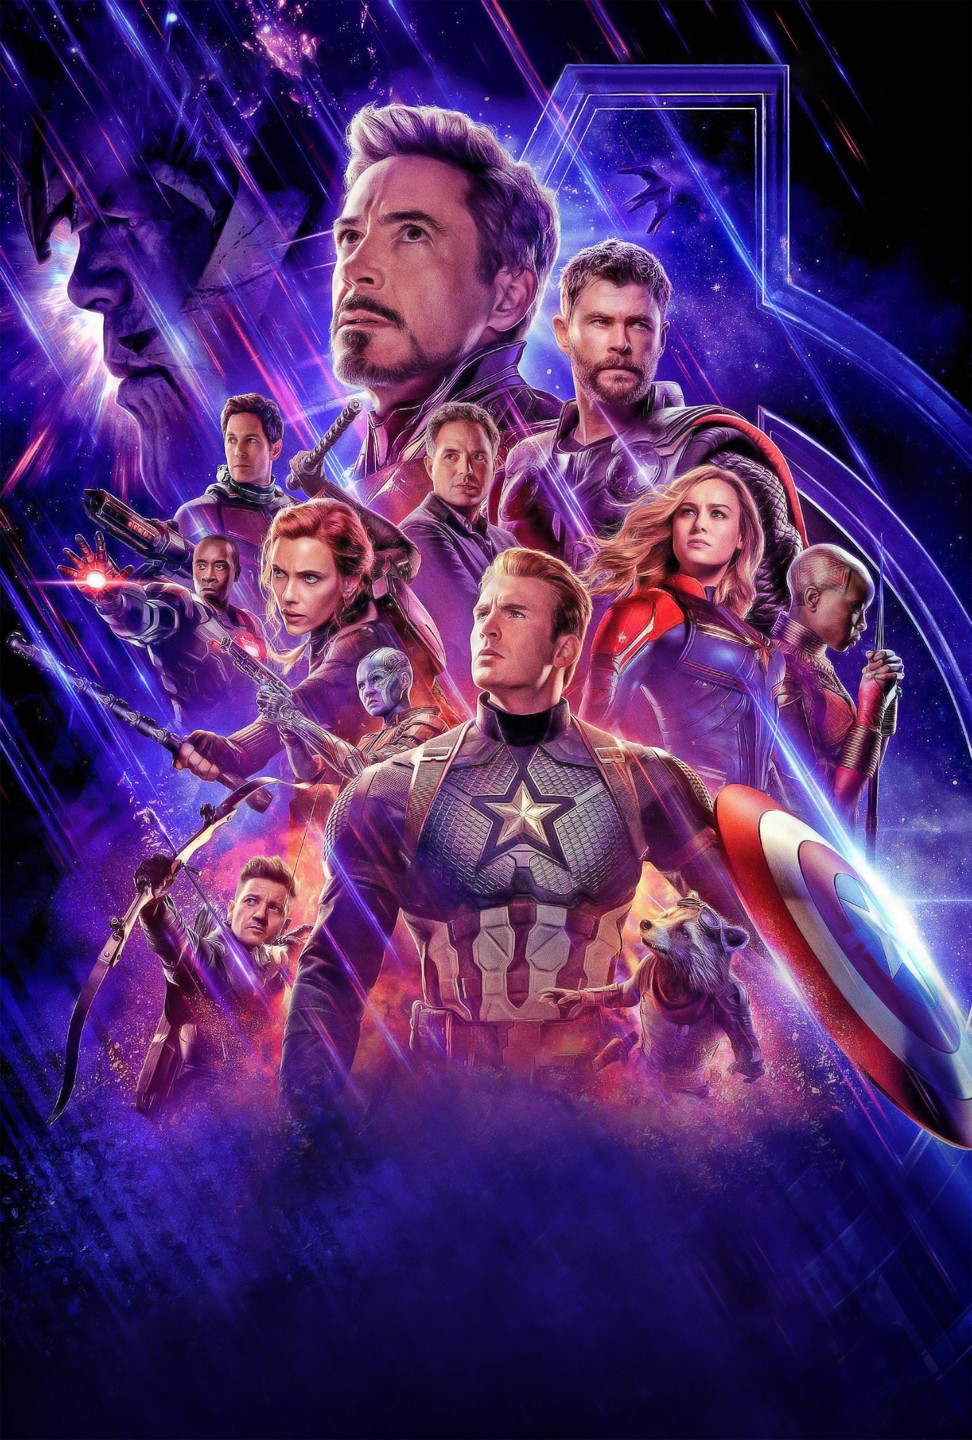 Poster of Avengers: Endgame. Photo: Handout